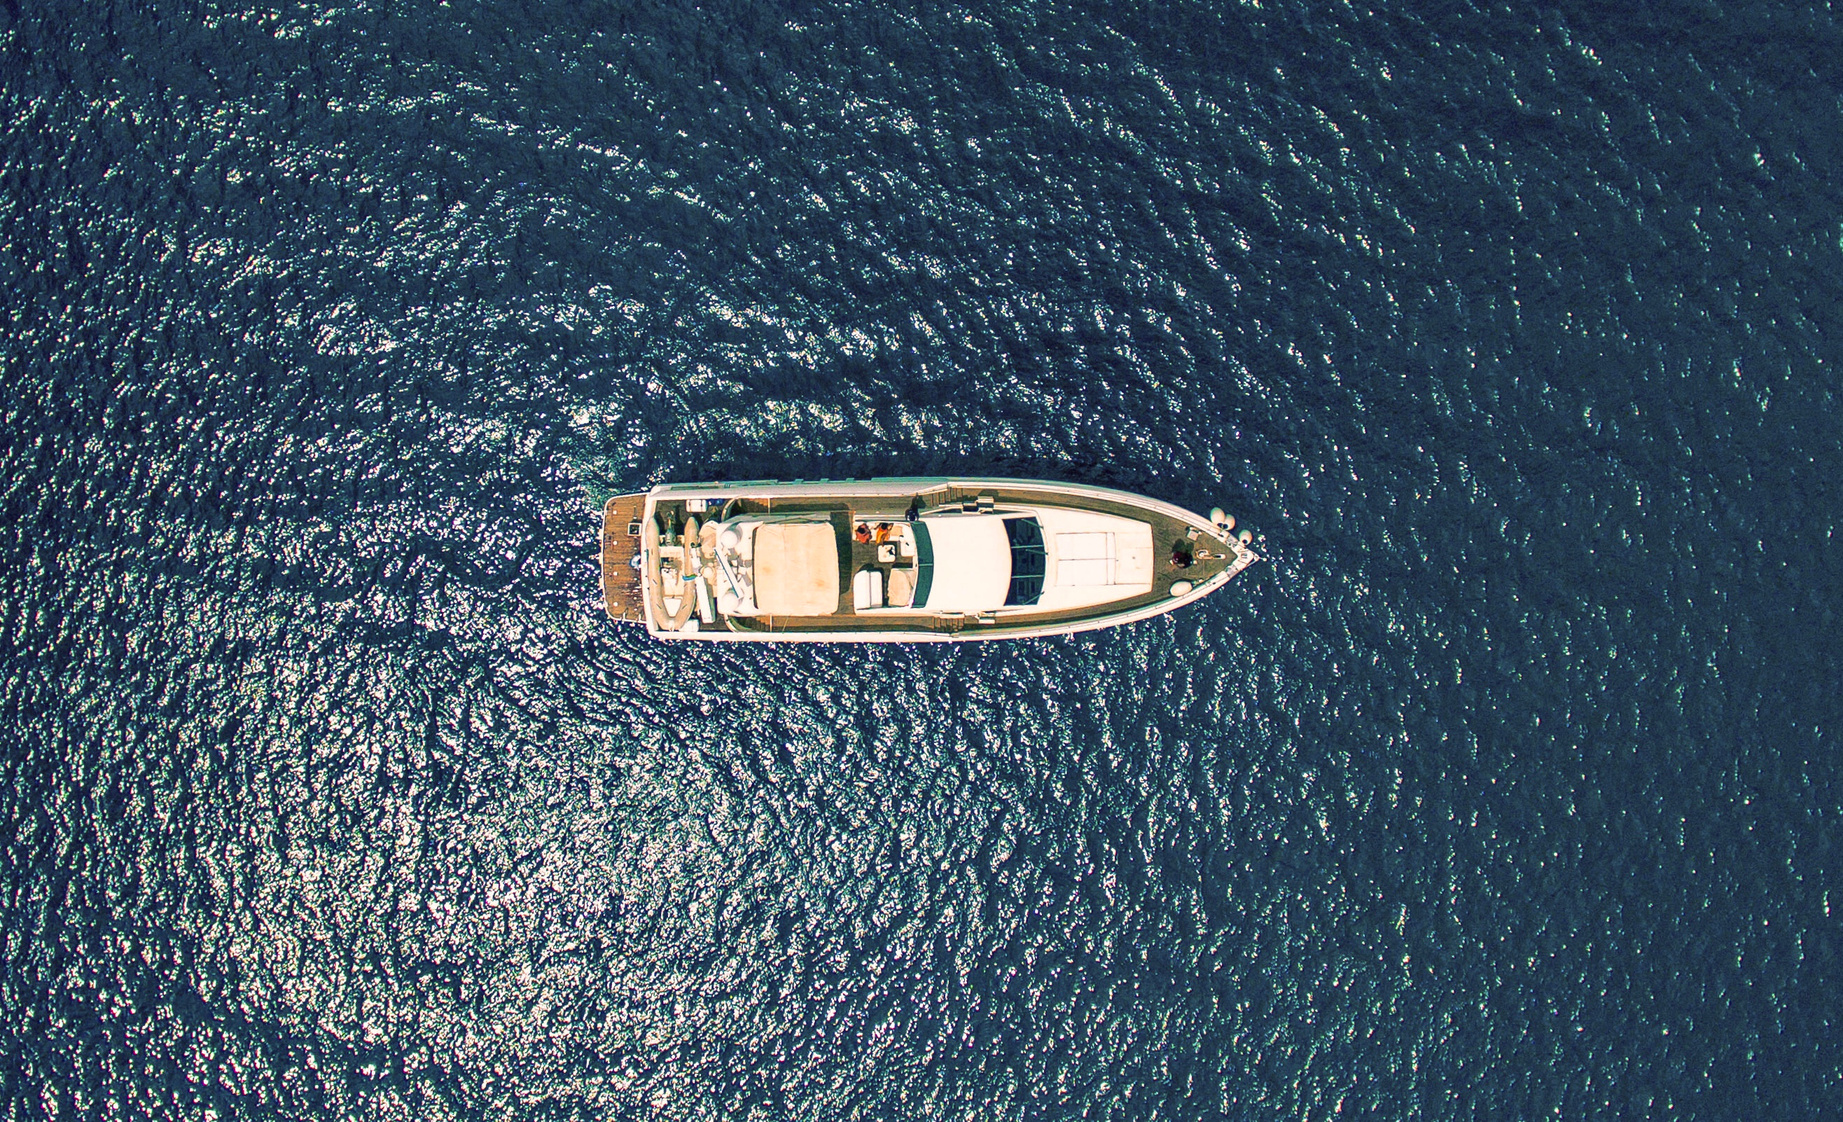 Yacht Sailing on Sea